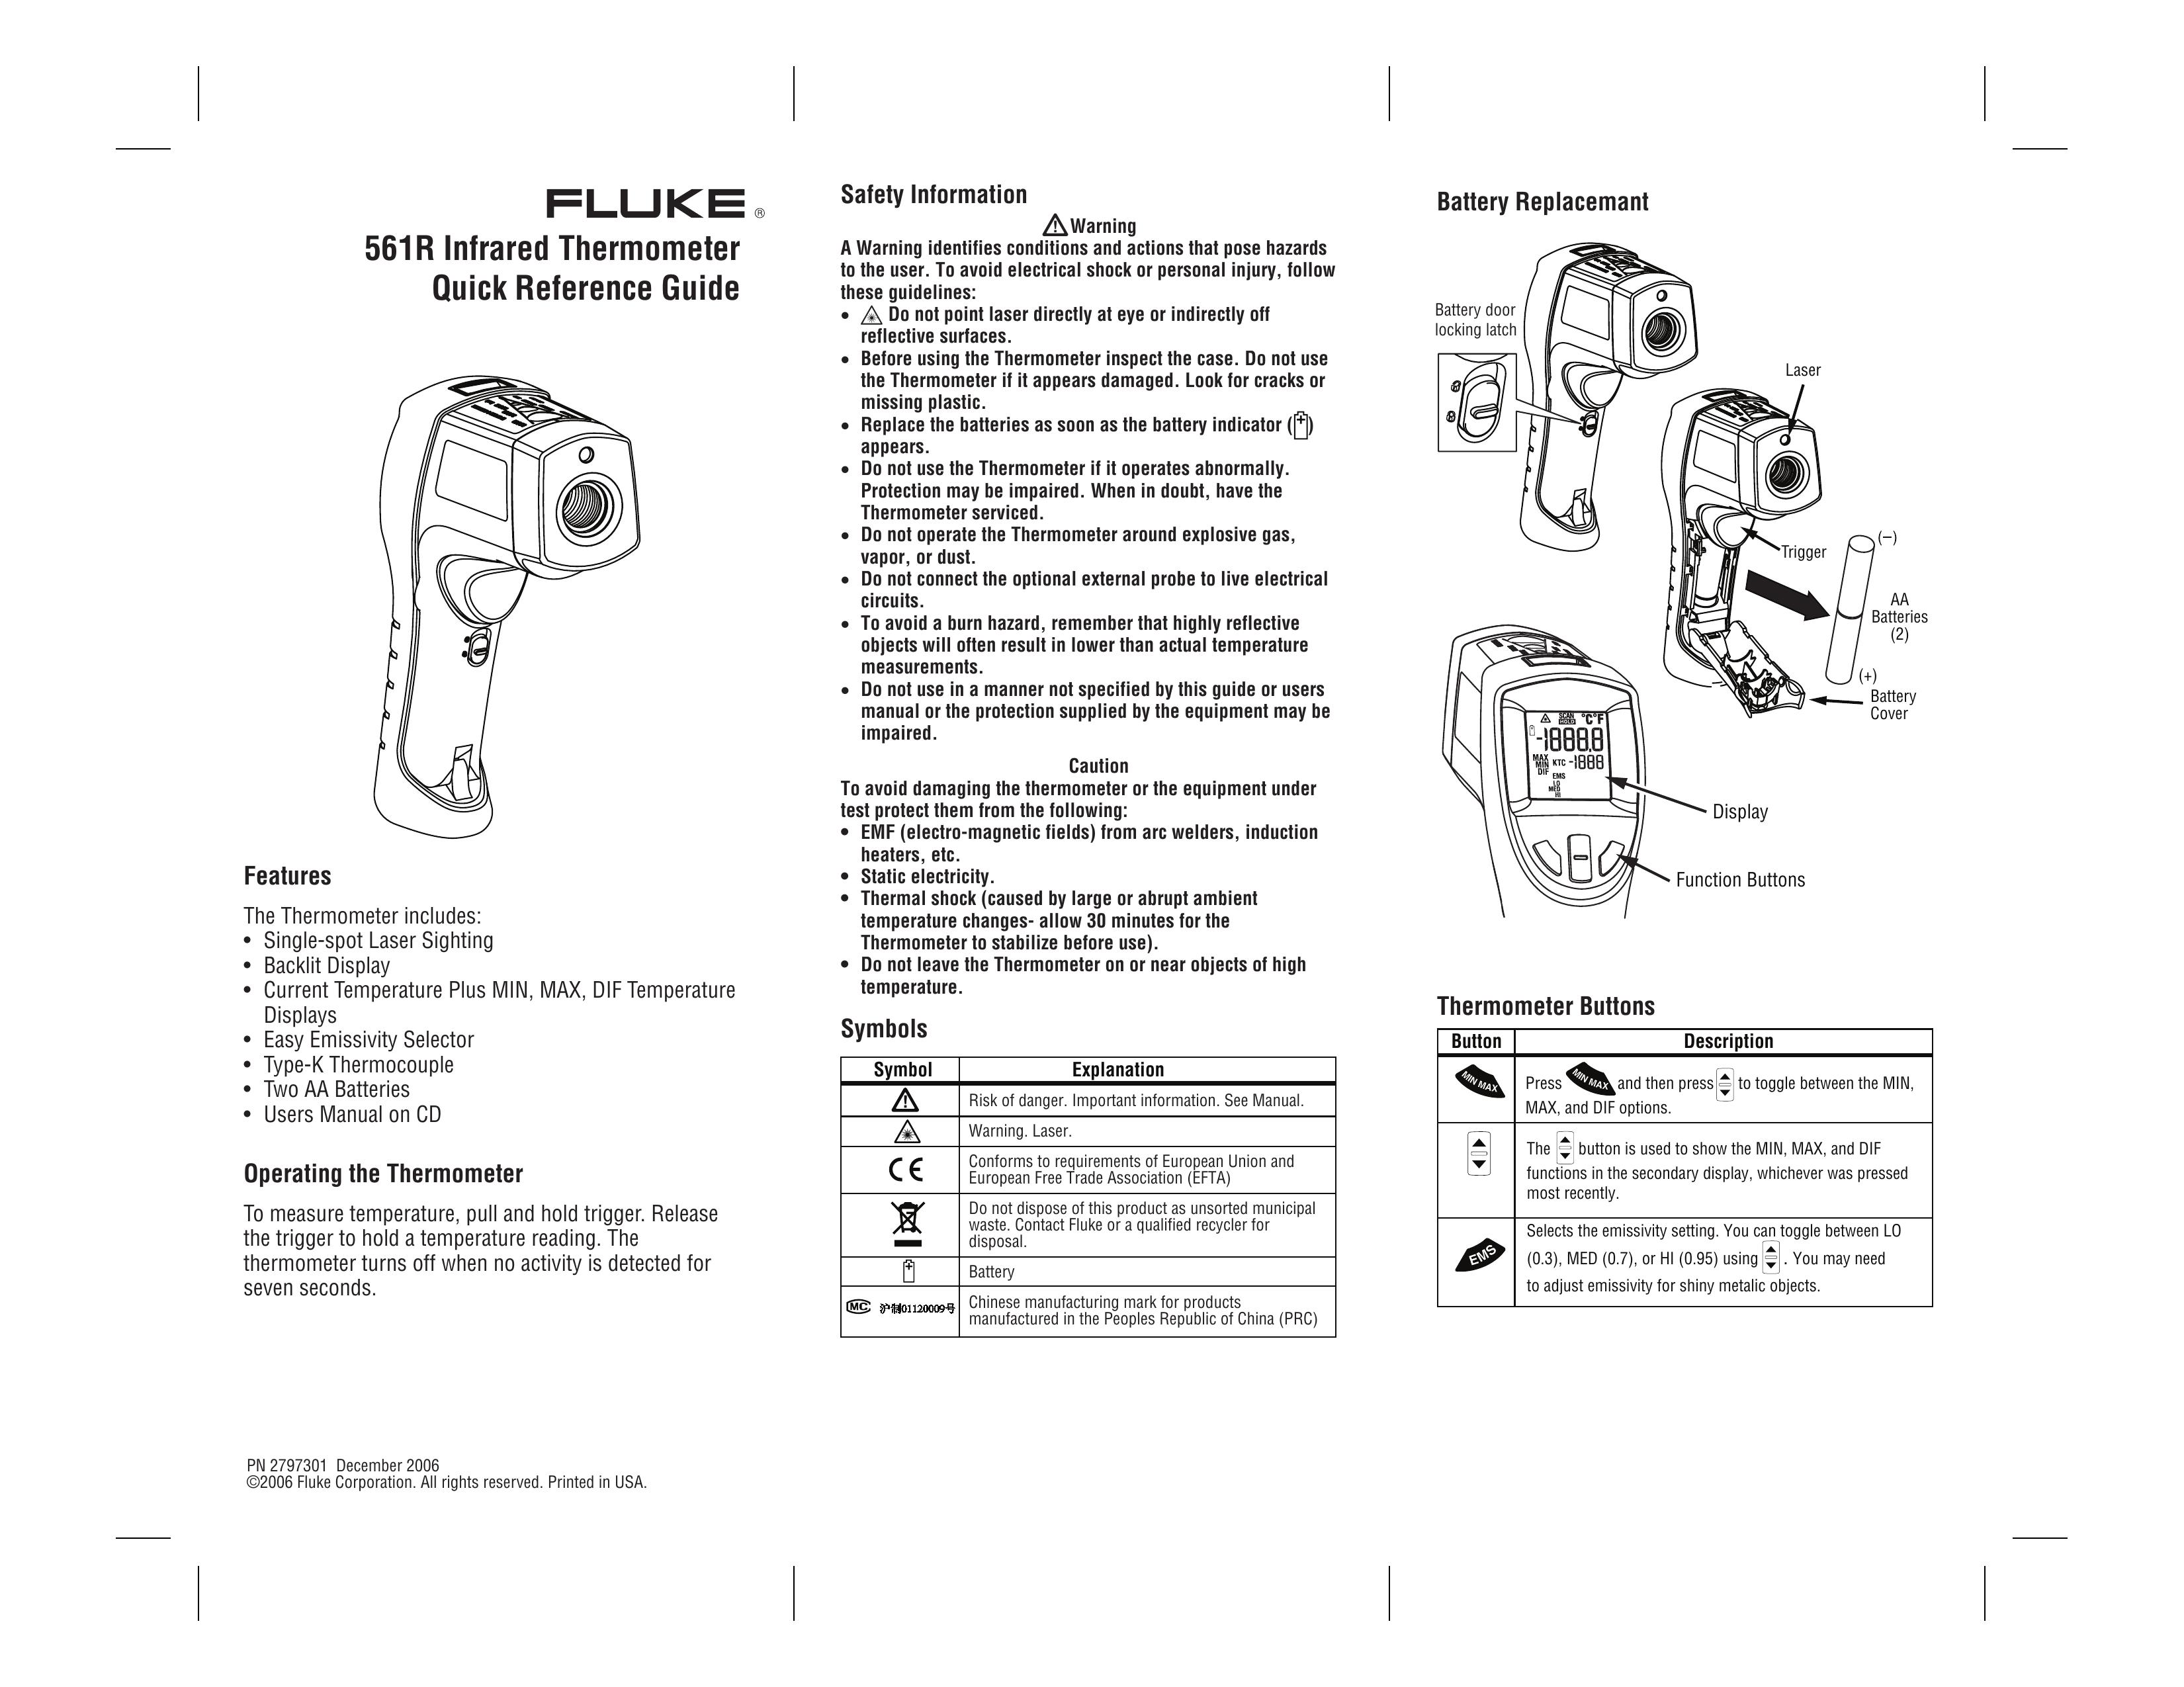 Fluke 561R Thermometer User Manual